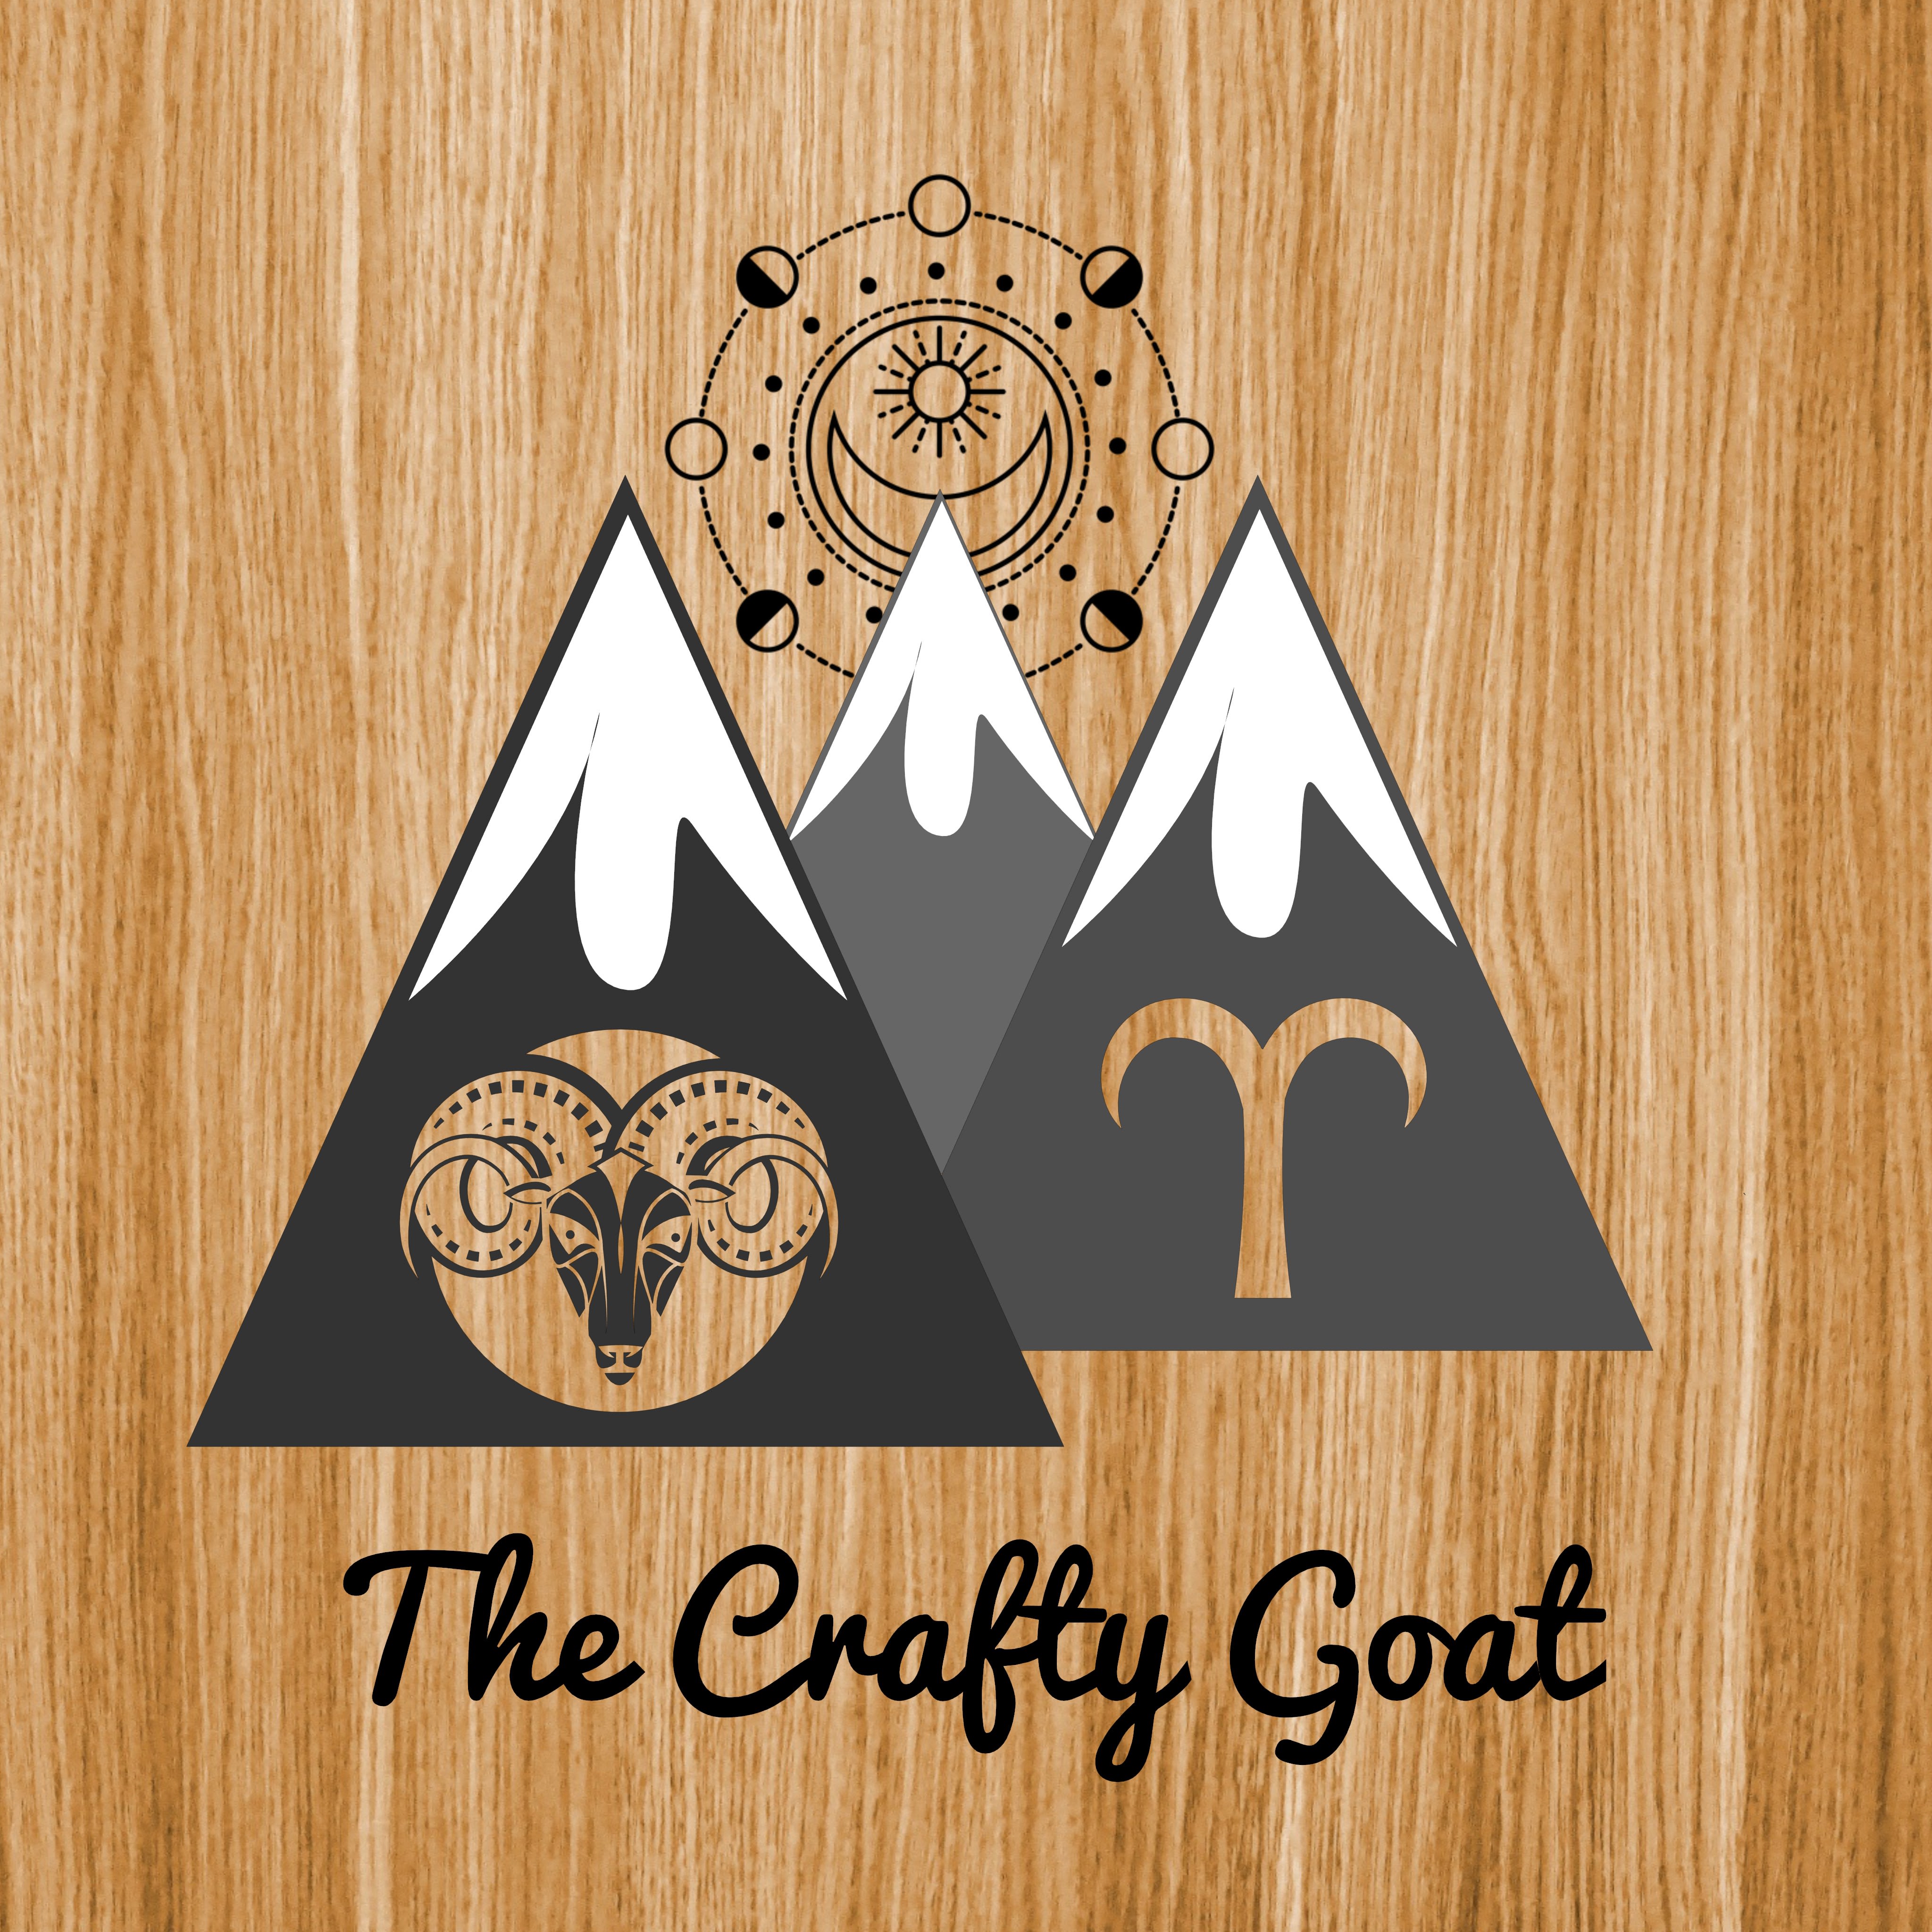 The Crafty Goat